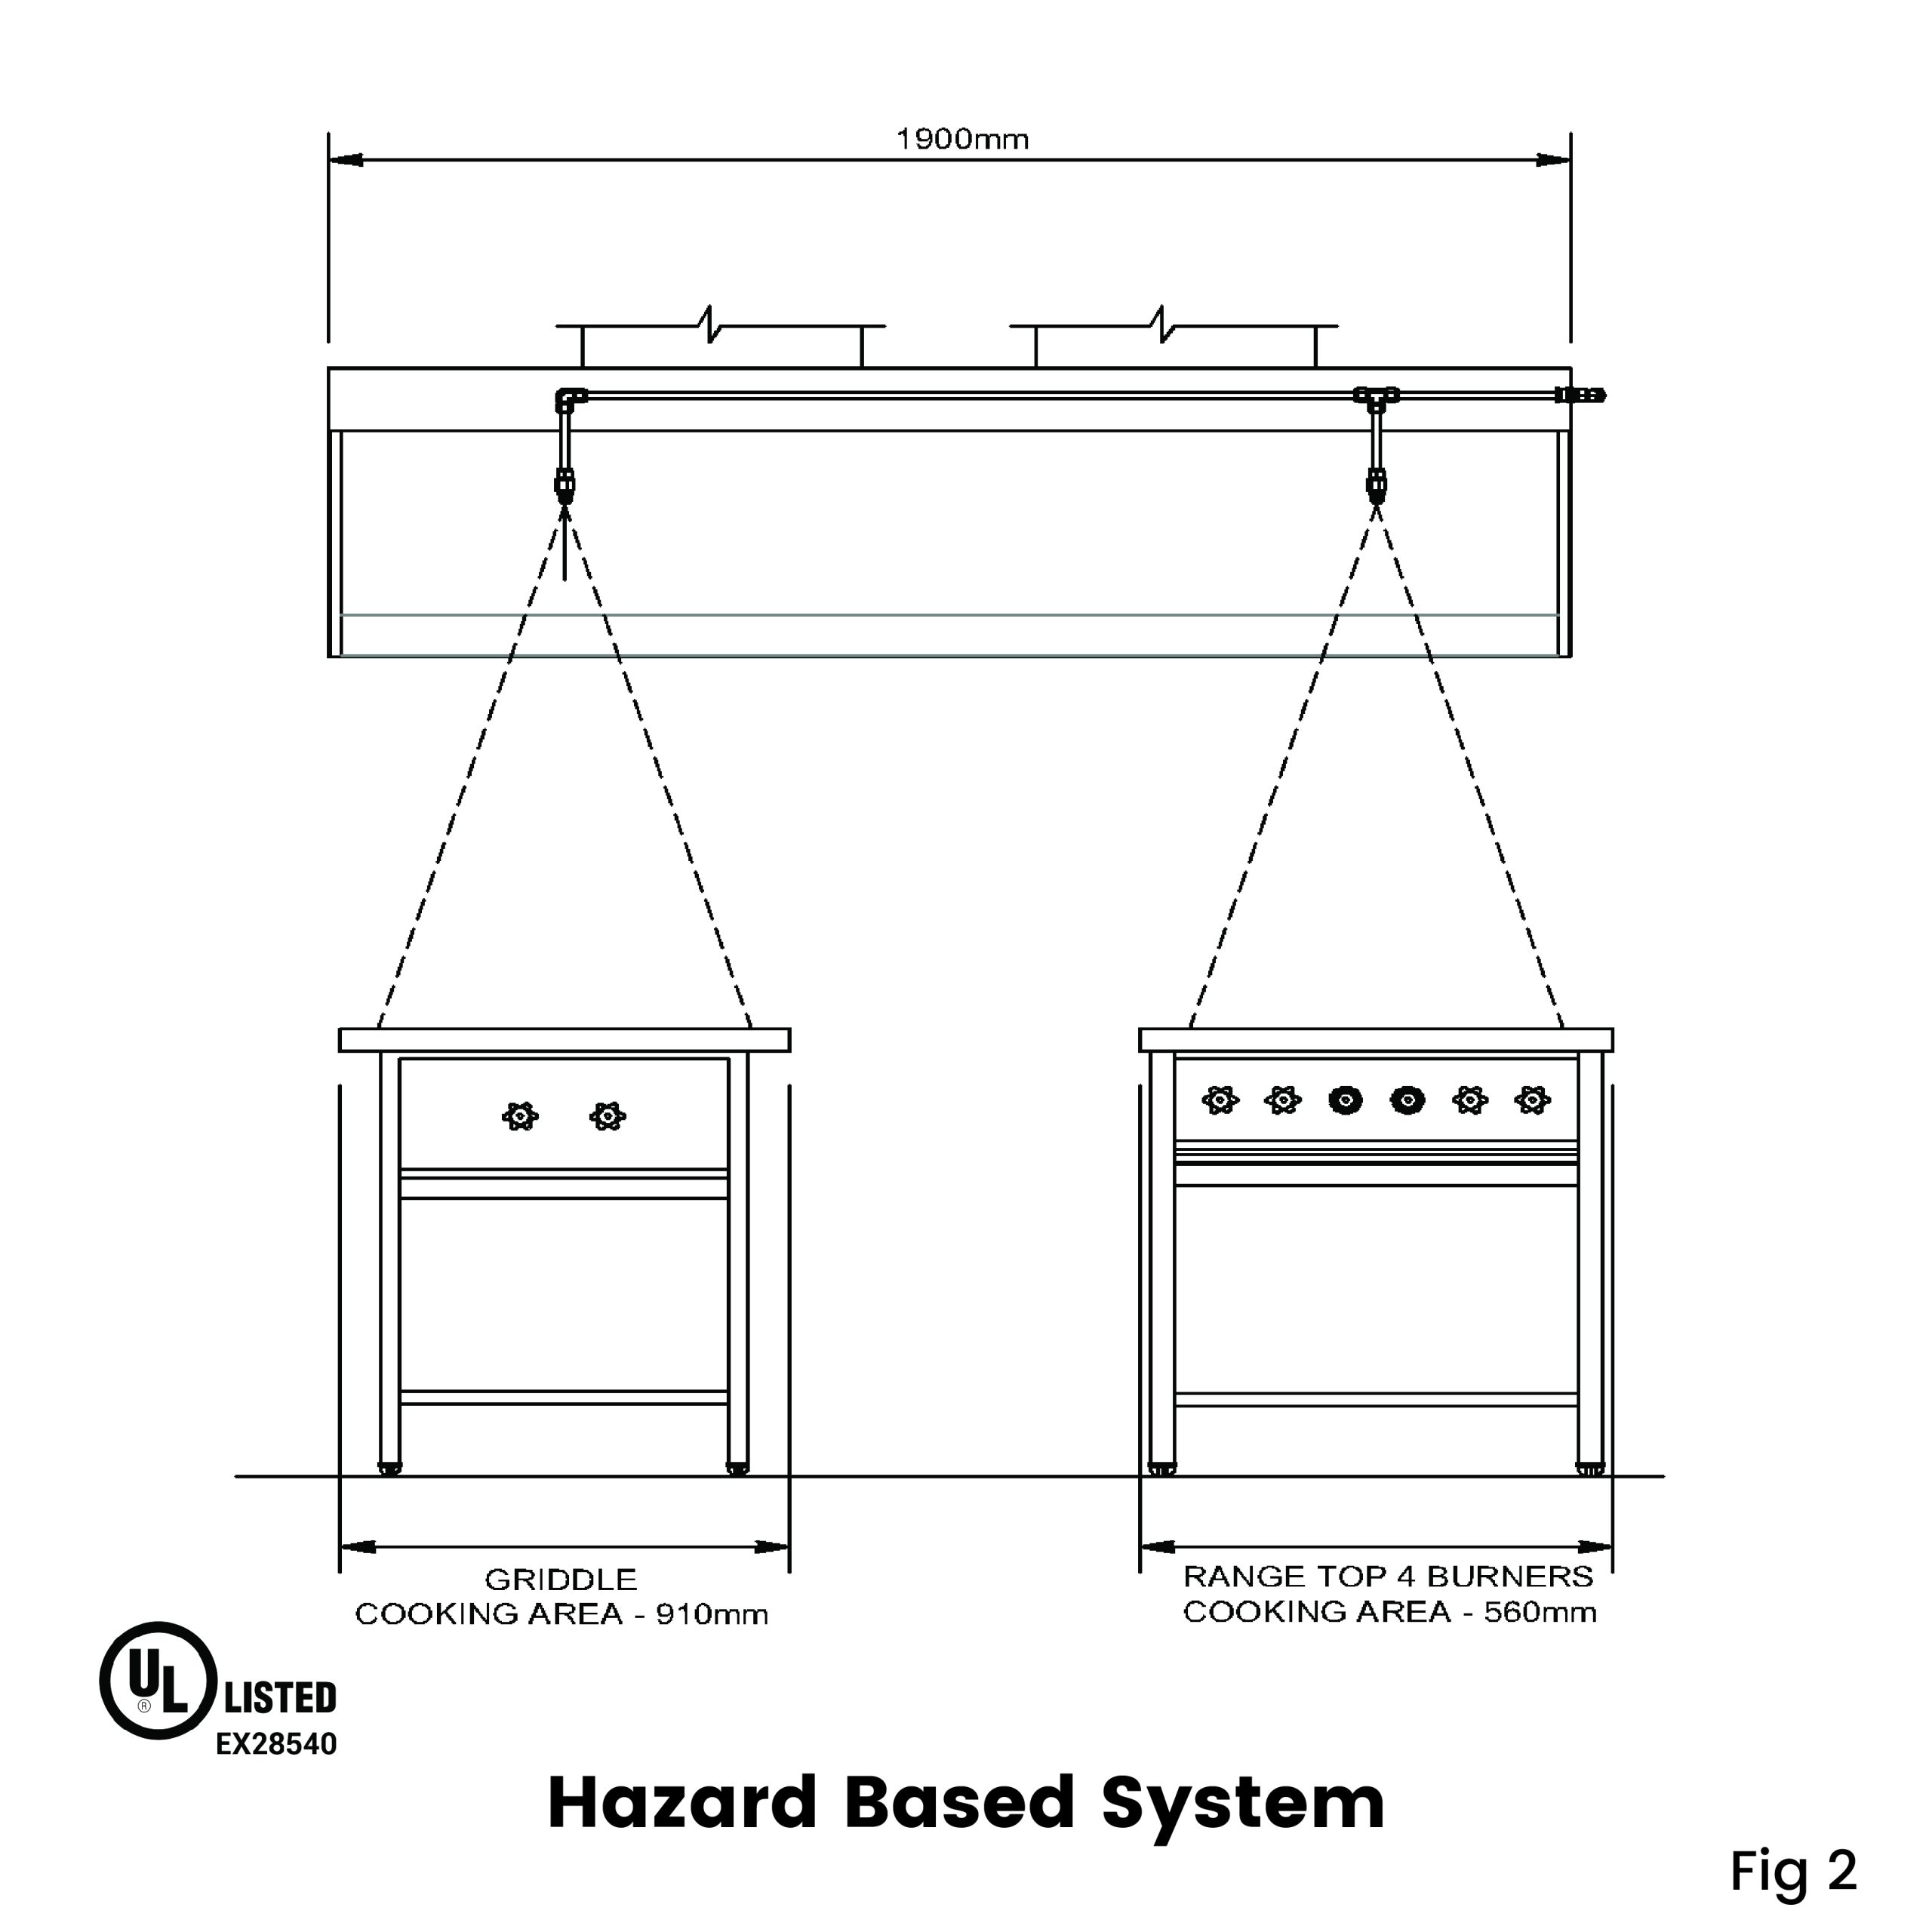 Hazard based system kitchen fire suppression system